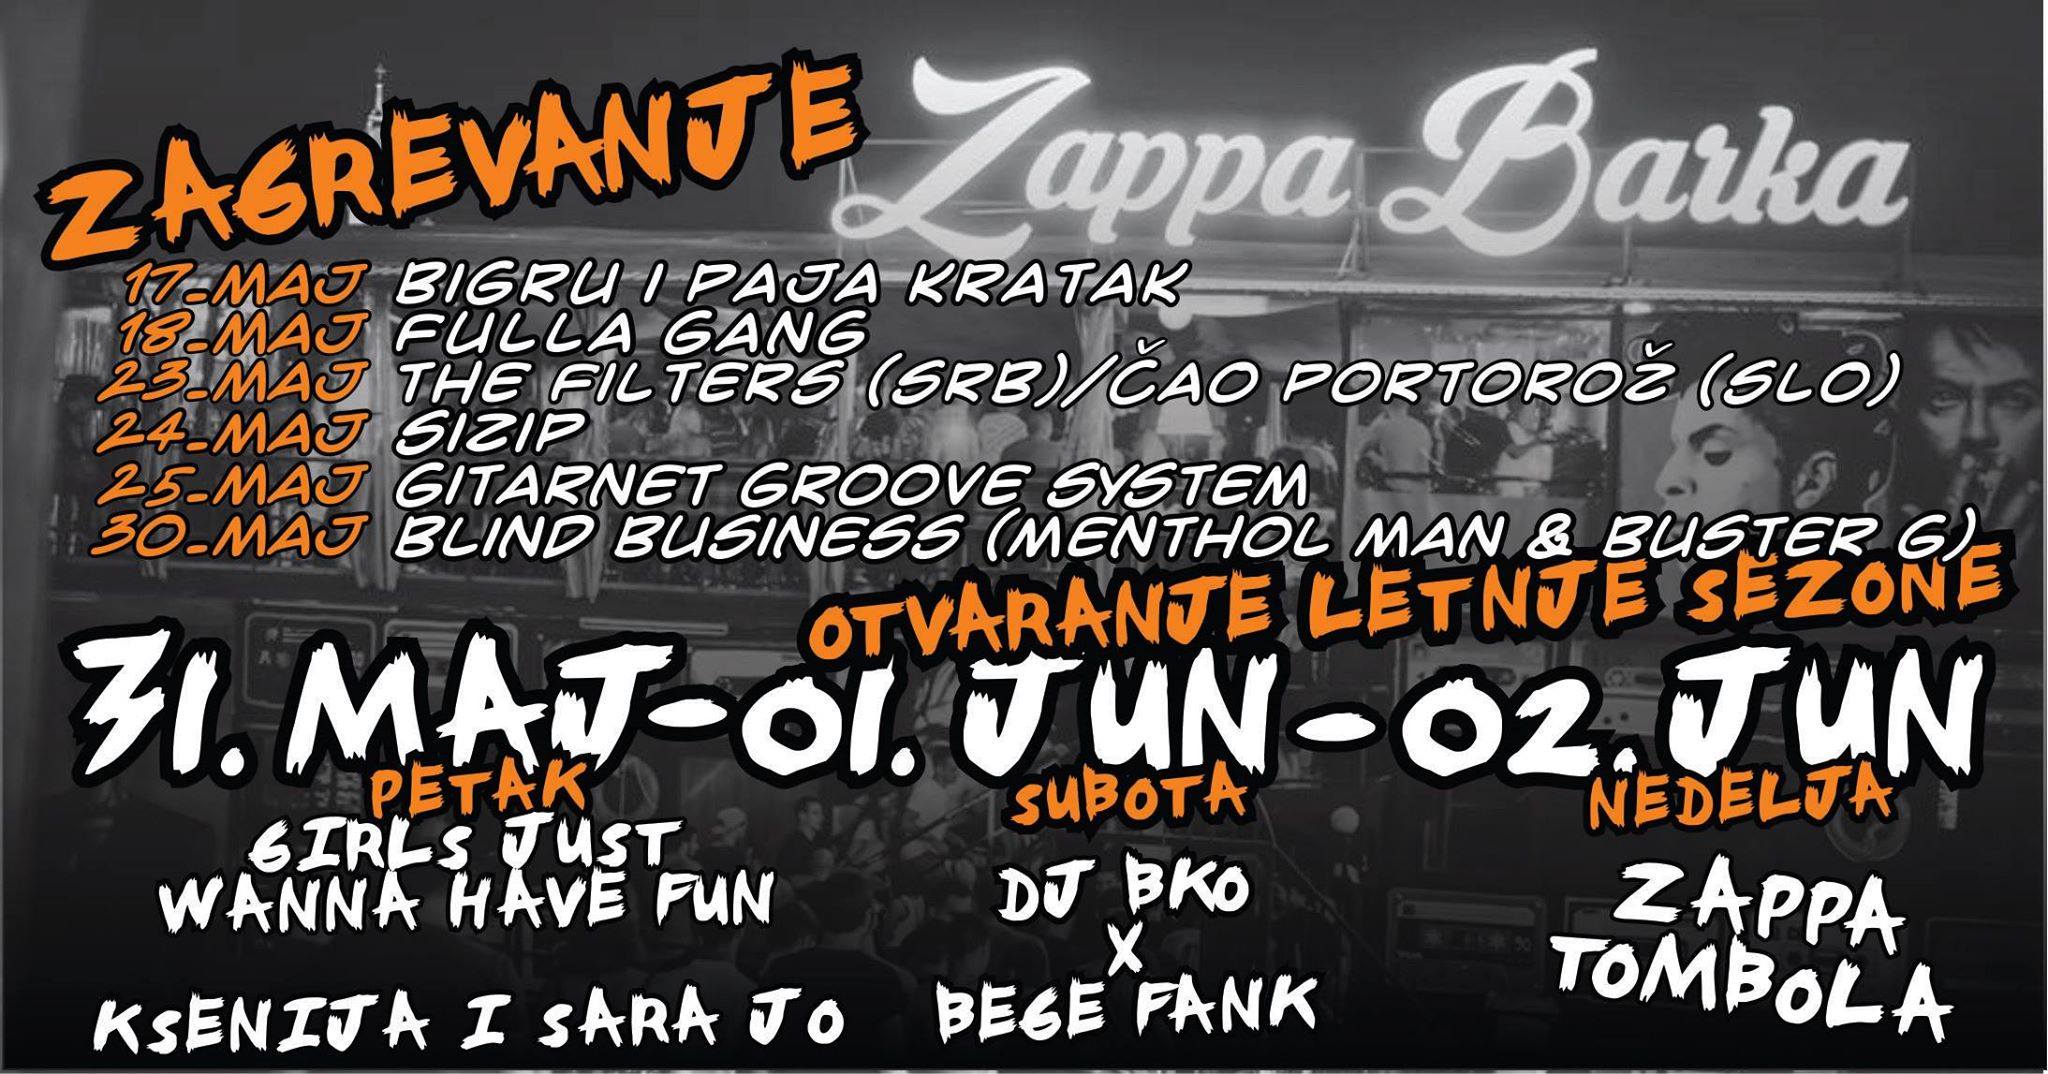 Opening of the summer season 31.05 – 02.06.2019. Zappa barka